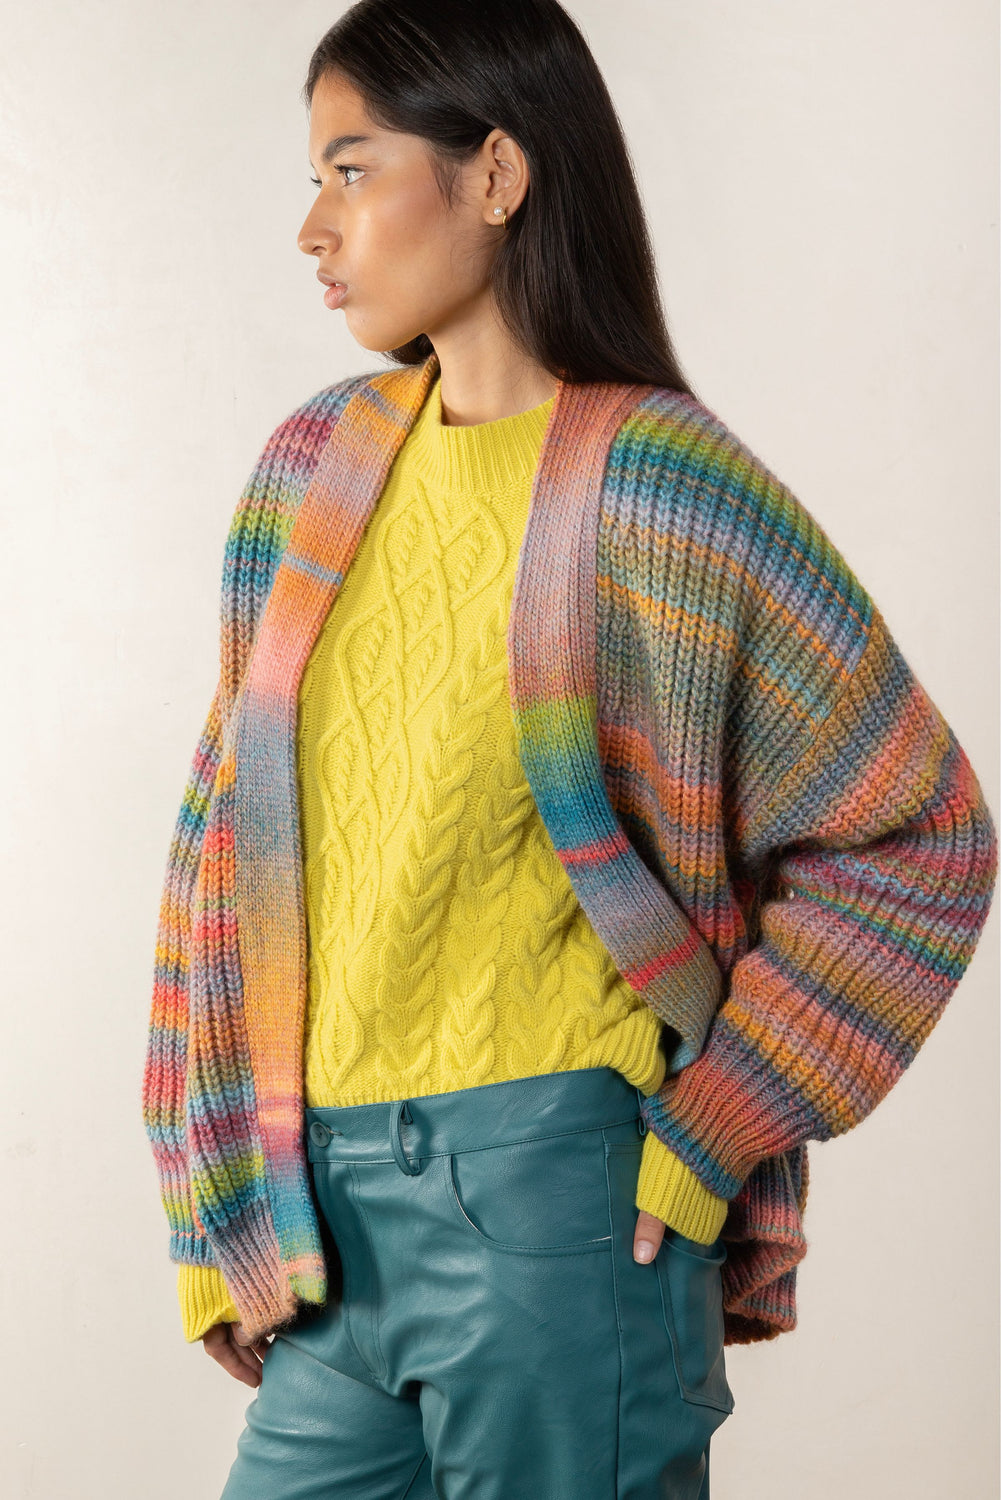 Sweater Weili Zheng